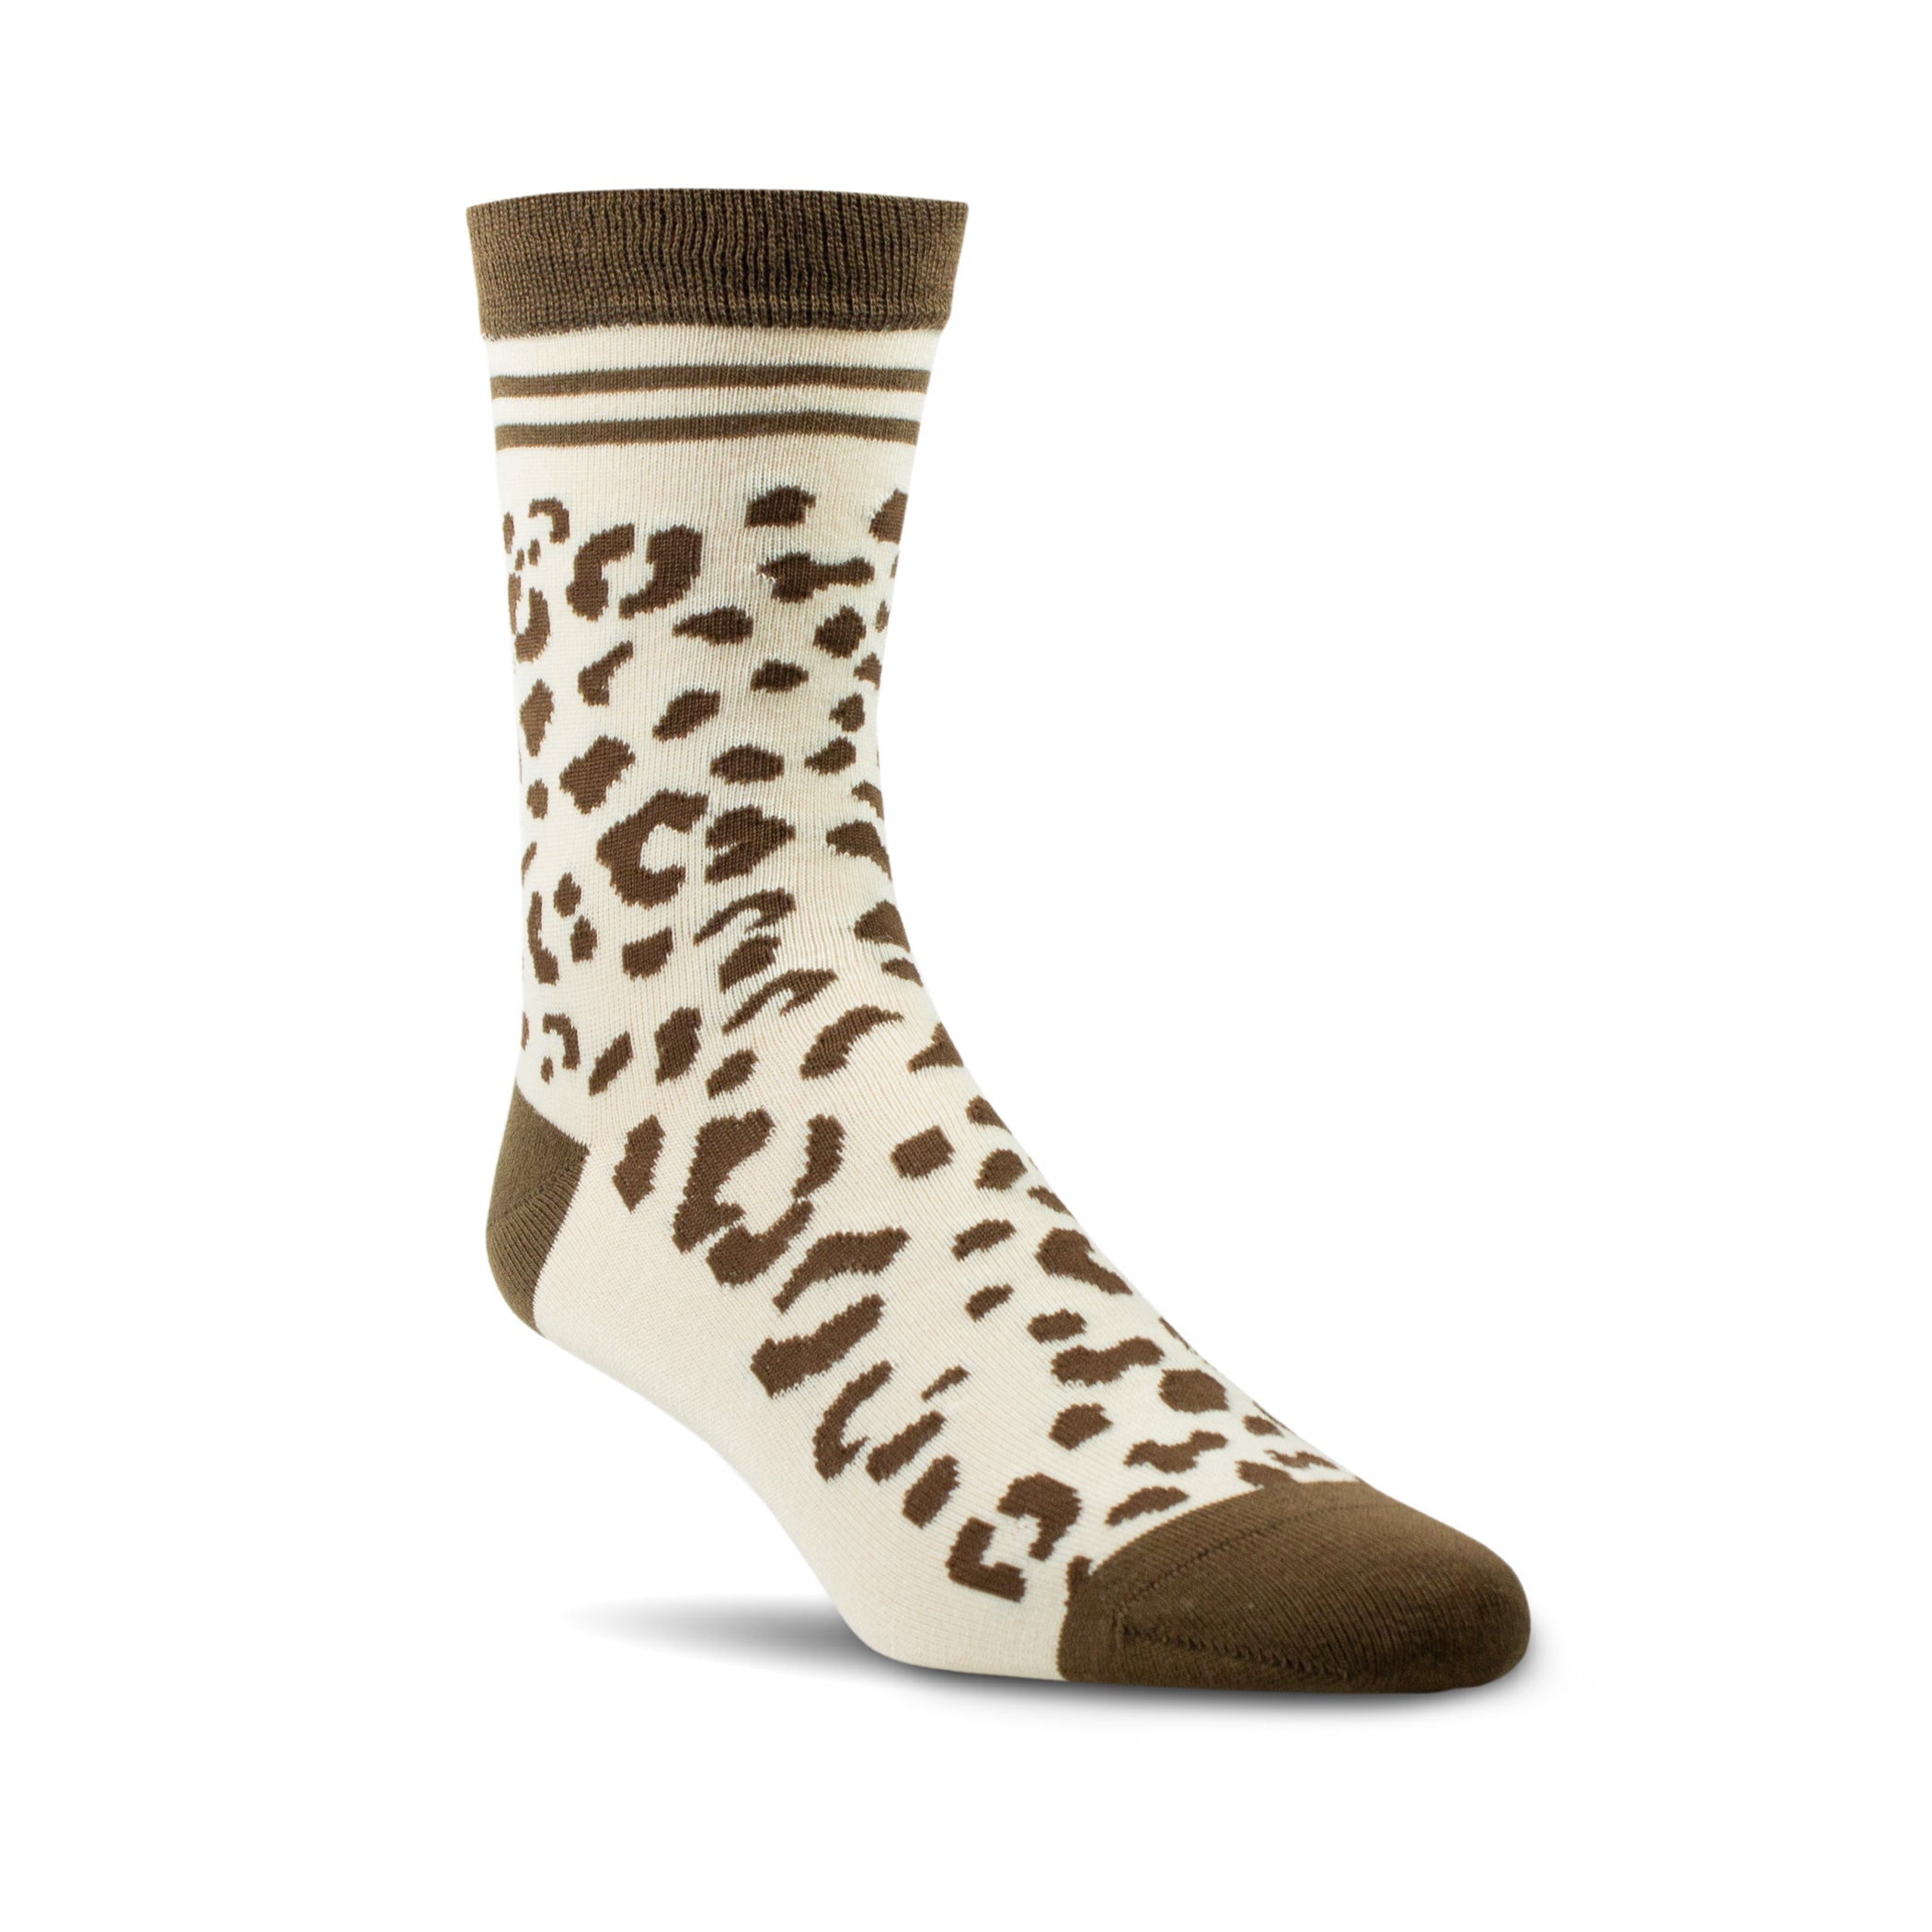 Ariat Wms Charm Crew Socks Leopard Camo